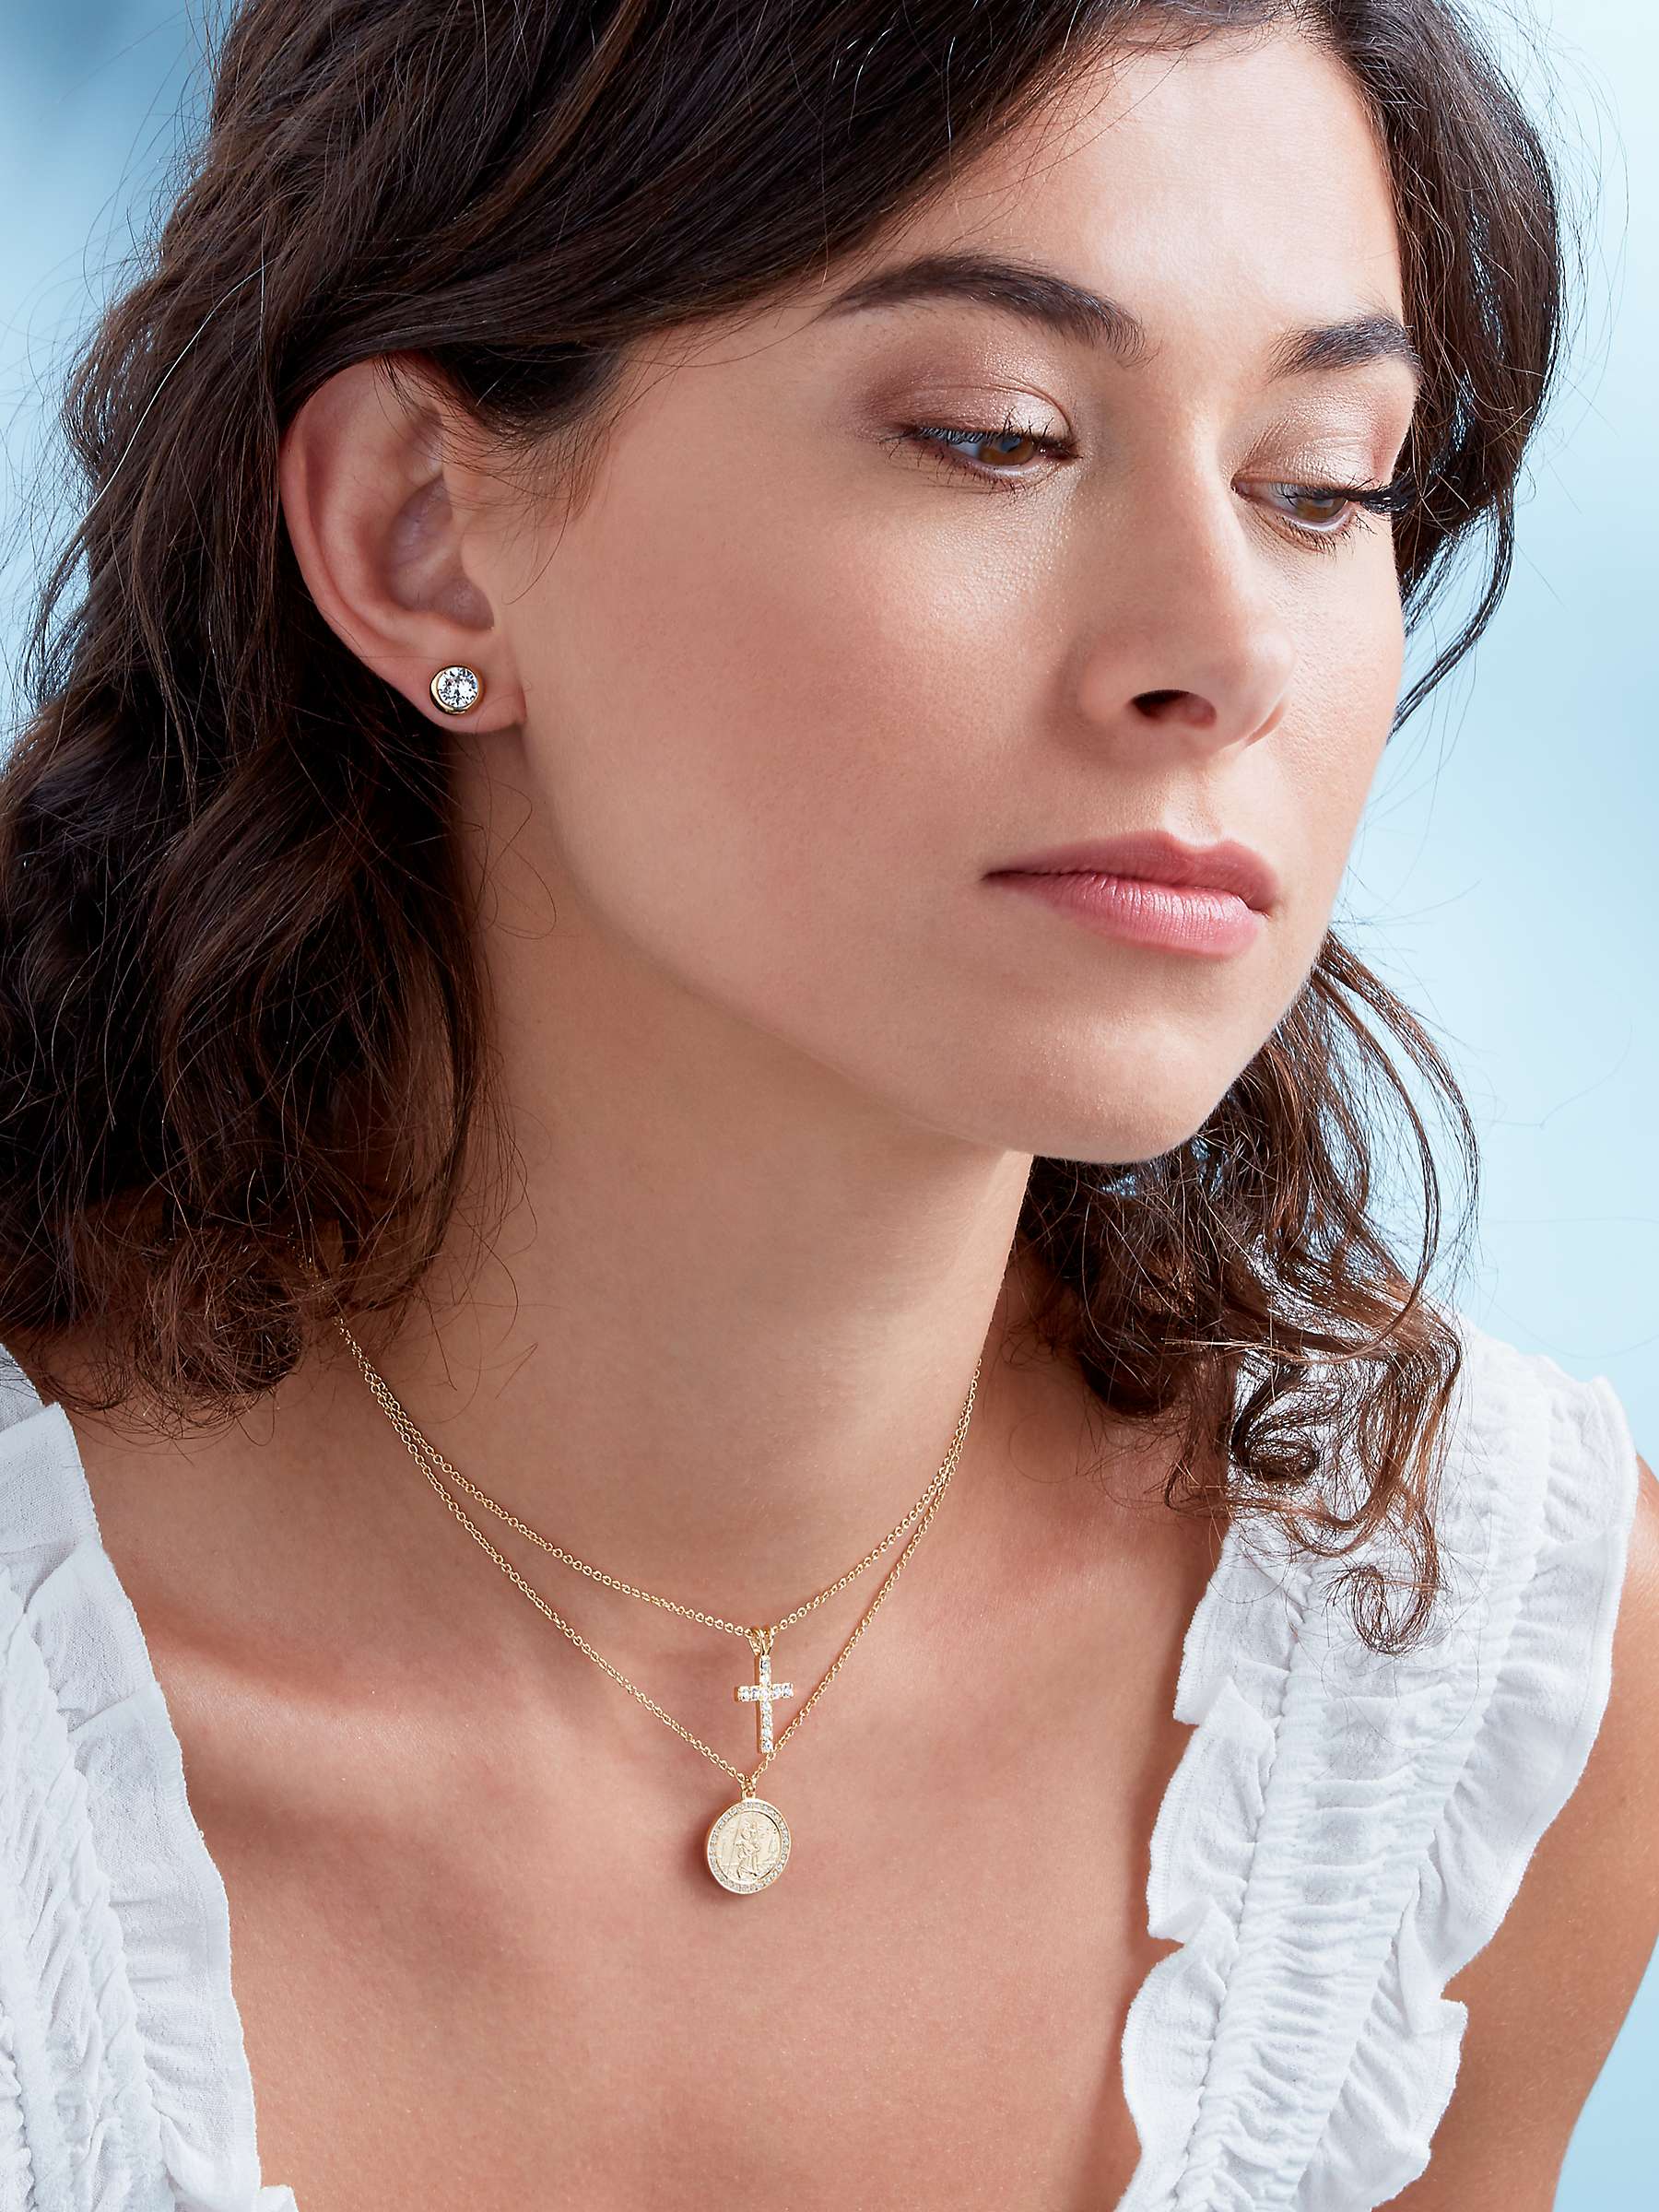 Buy Melissa Odabash Crystal St Christopher Round Pendant Necklace, Gold Online at johnlewis.com